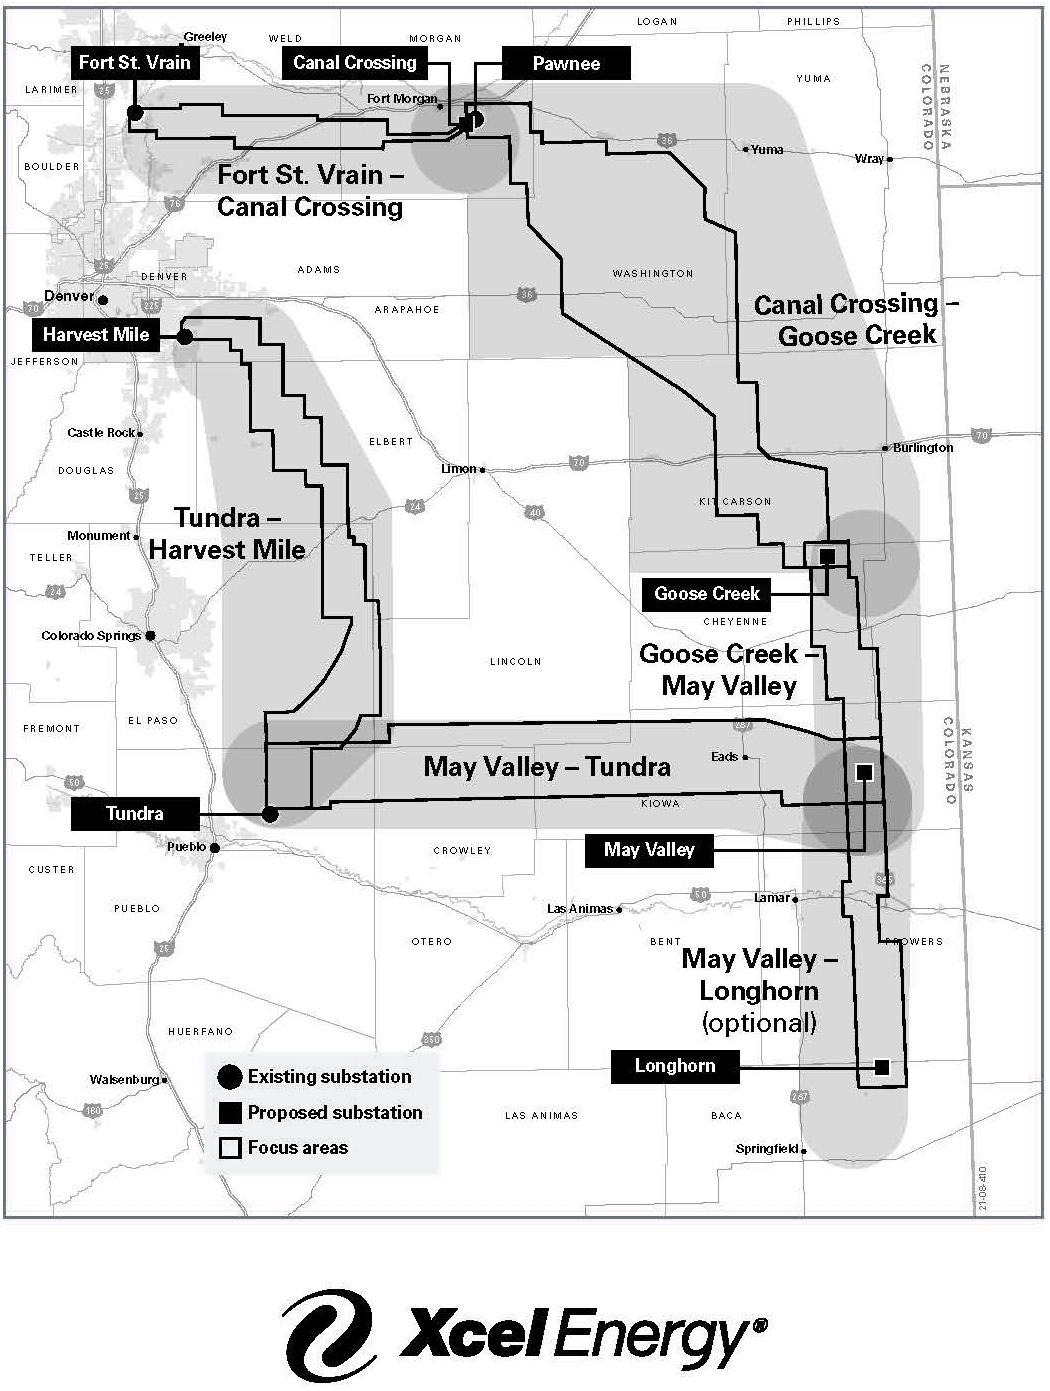 2022 02 25 map colorados power pathway xcel energy jpg Kiowa County 